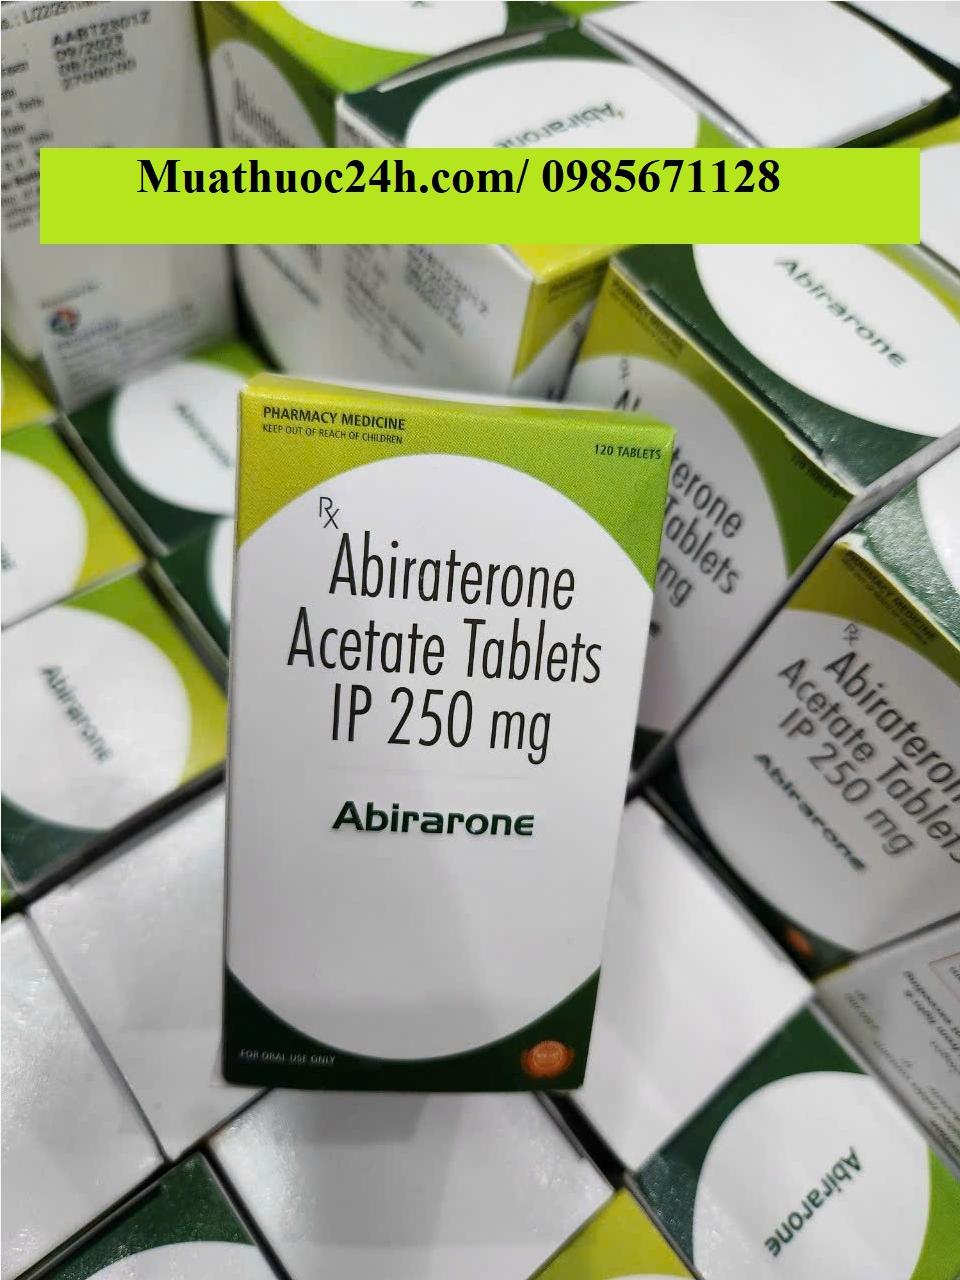 Thuốc Abirarone Abiraterone Acetate 250mg giá bao nhiêu mua ở đâu?